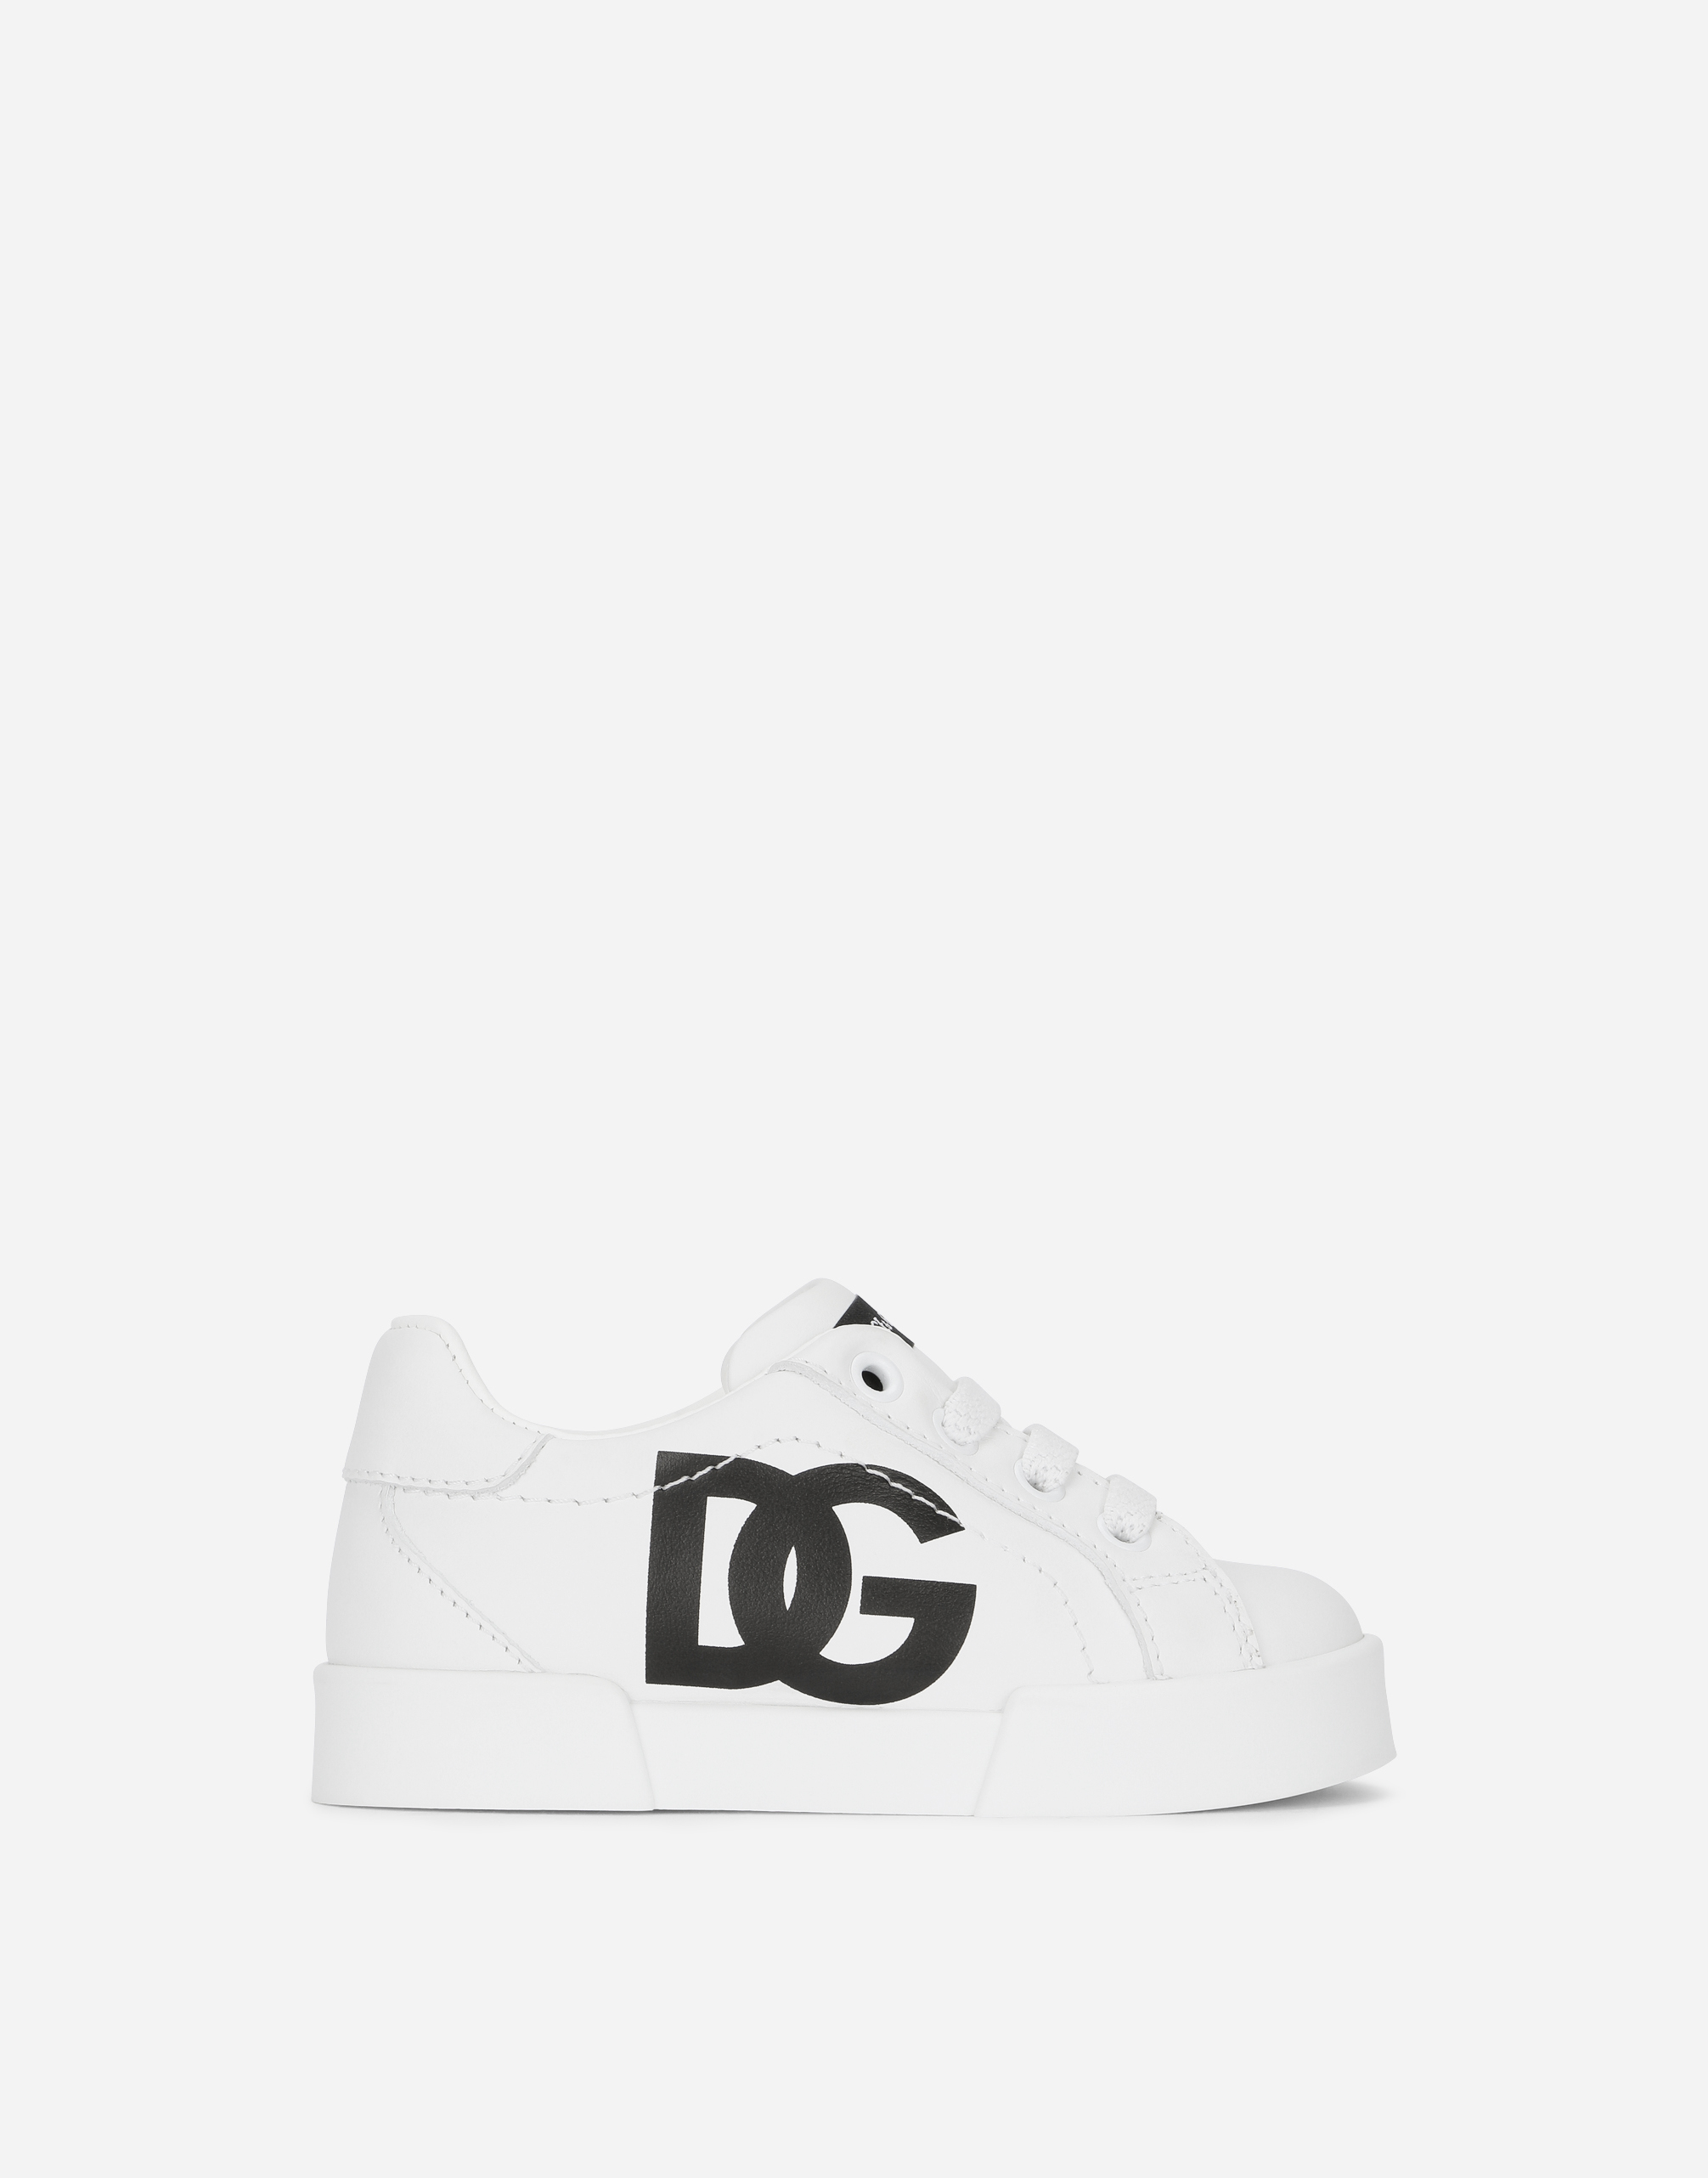 Portofino Light sneakers with DG logo in White